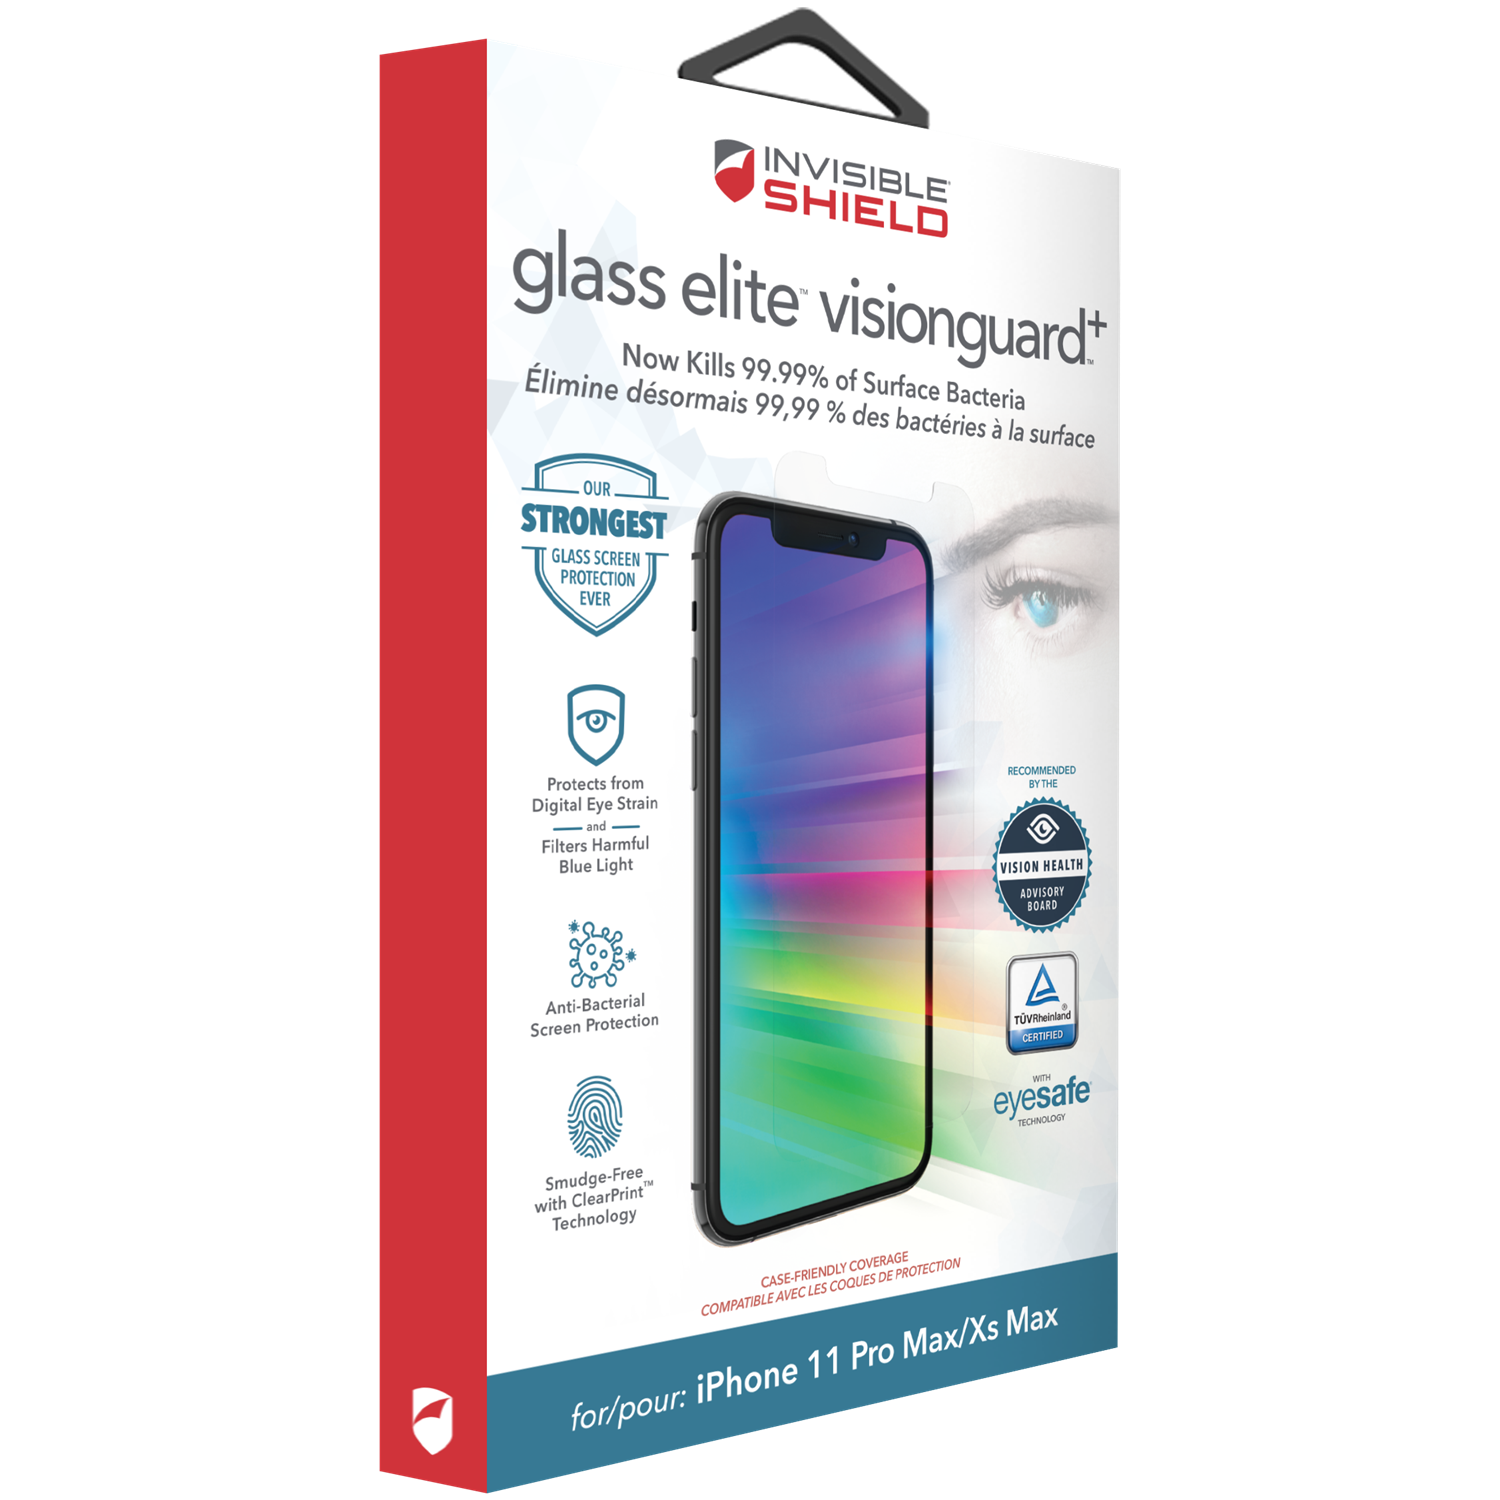 InvisibleShield Glass Elite Visionguard+ iPhone XS Max/11 Pro Max